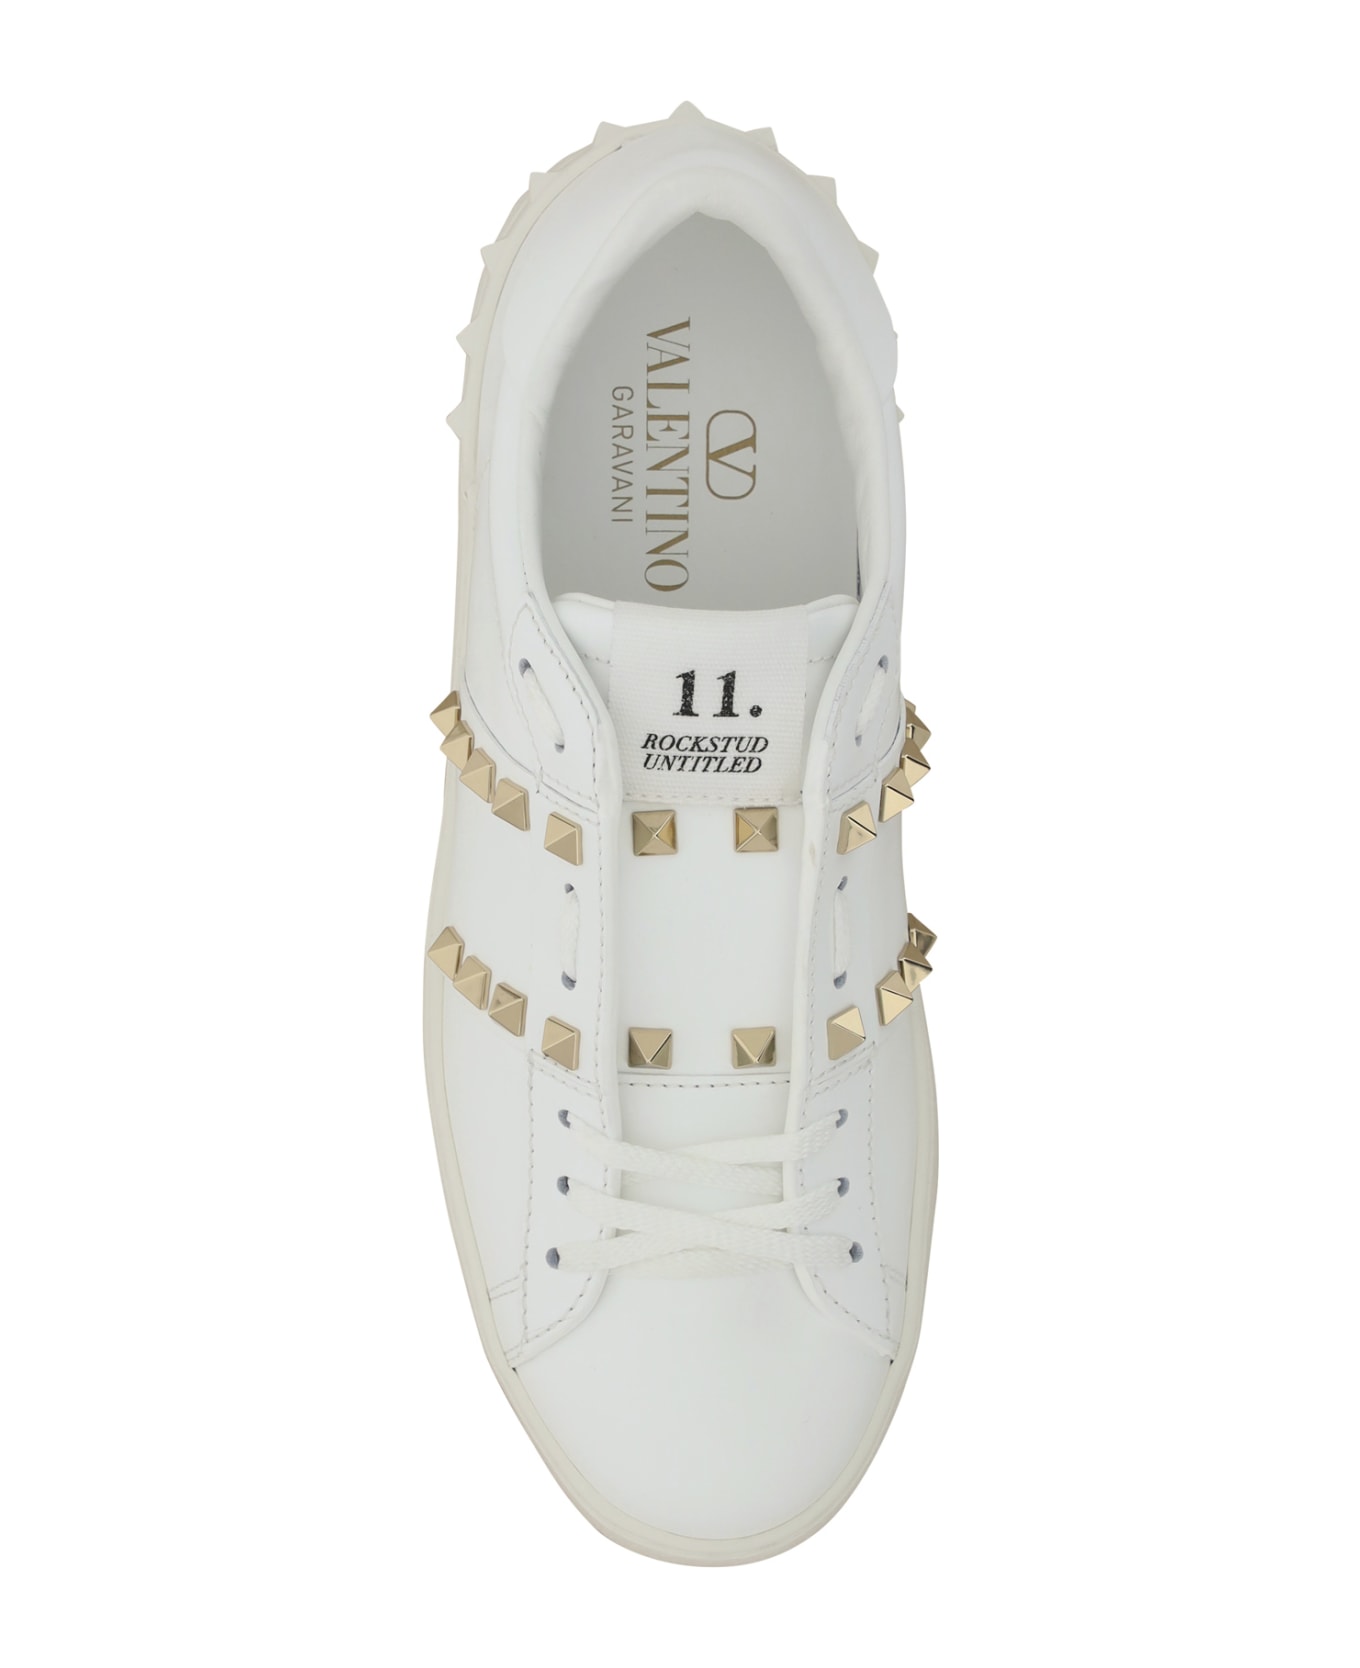 Valentino Garavani Rockstud Untitled Sneakers - Bianco スニーカー